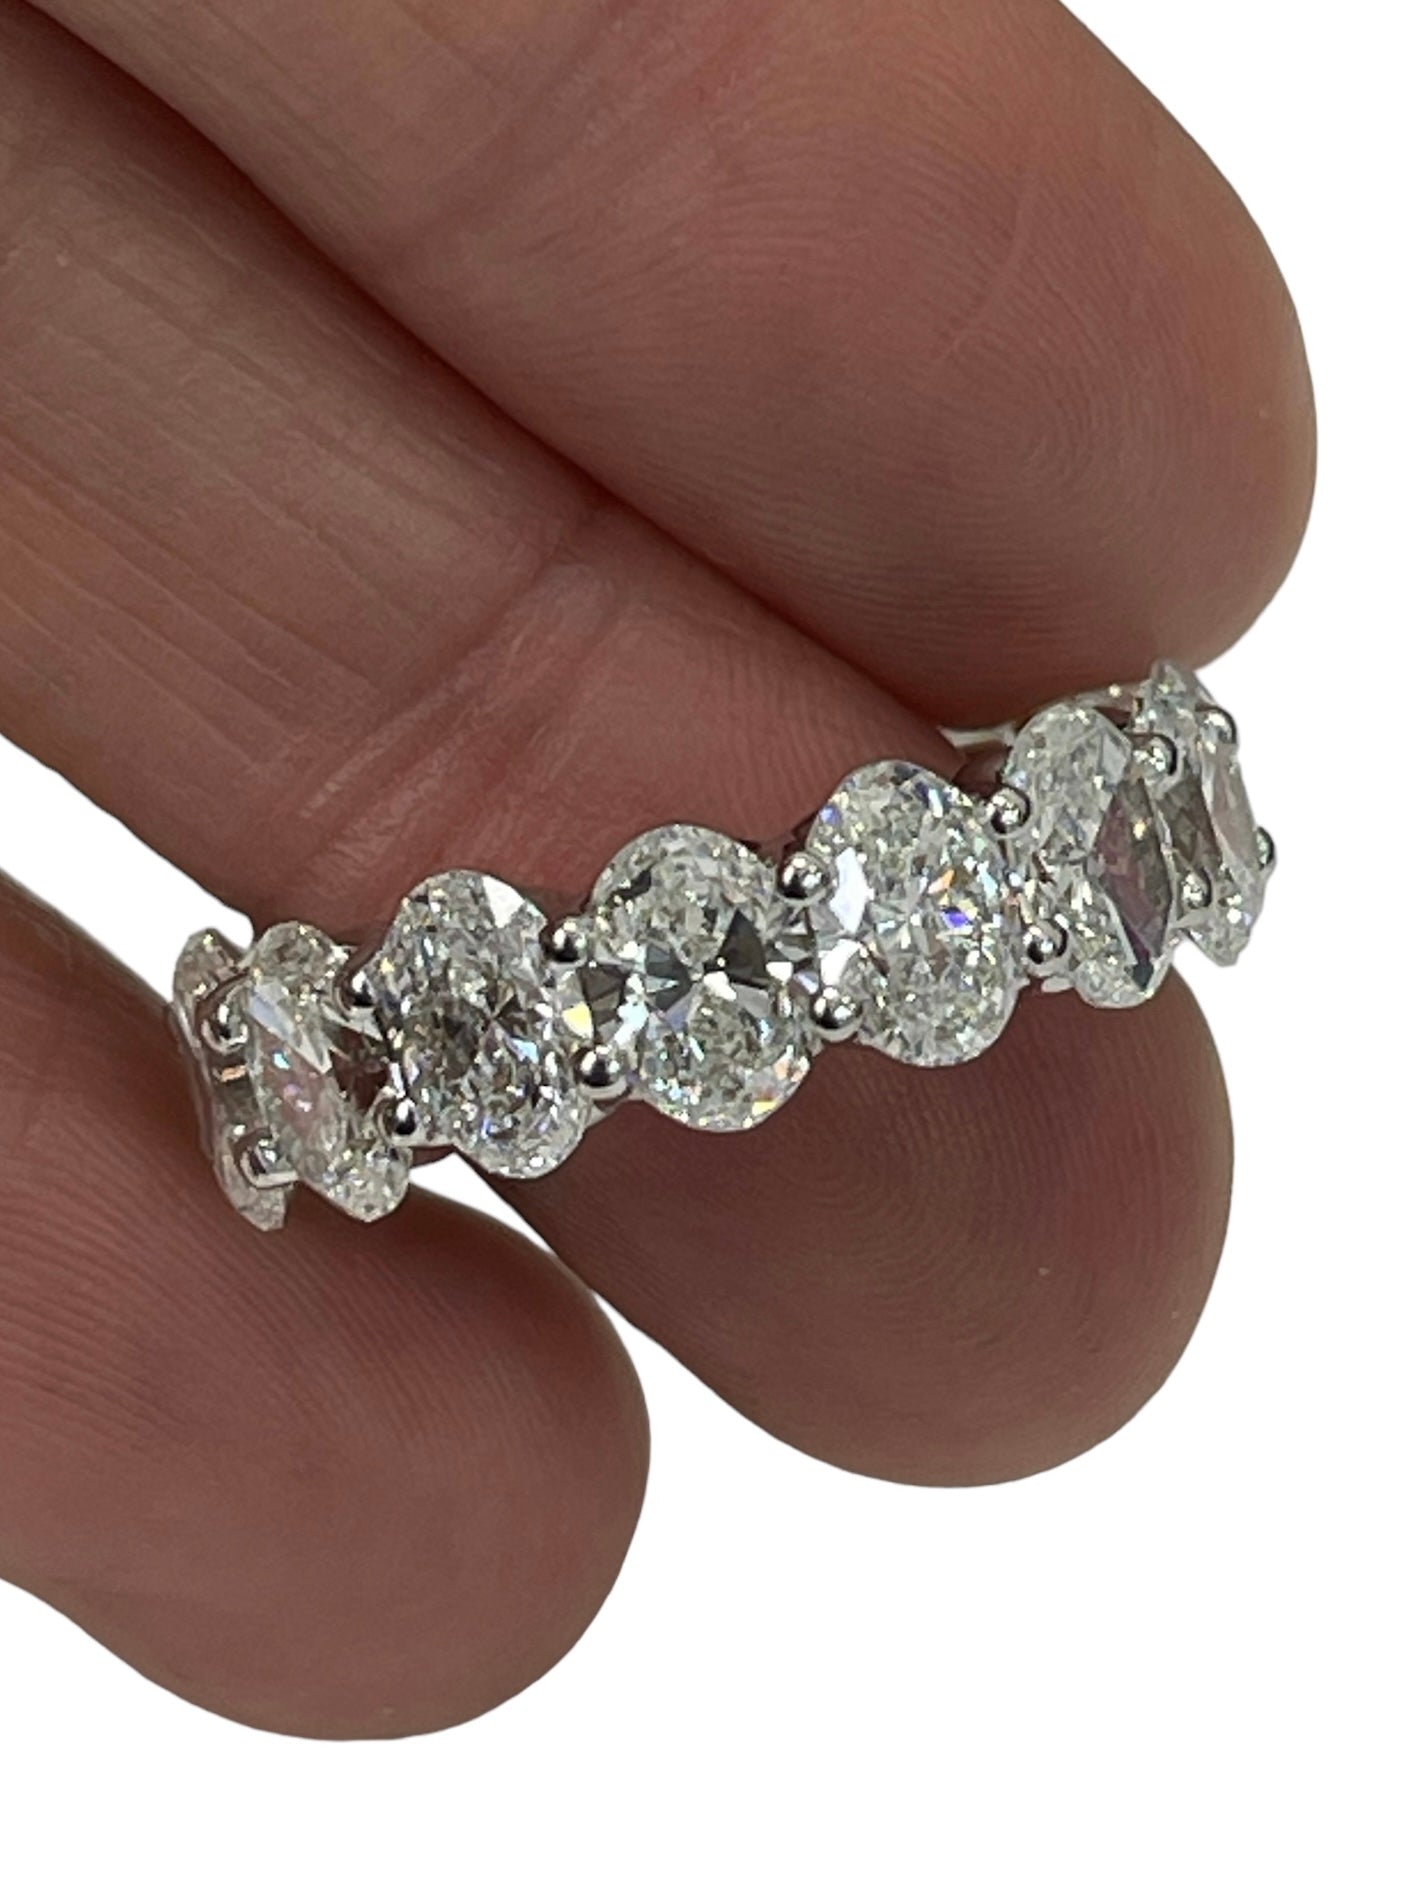 Oval Brilliant Eternity Diamond Ring White Gold 18kt